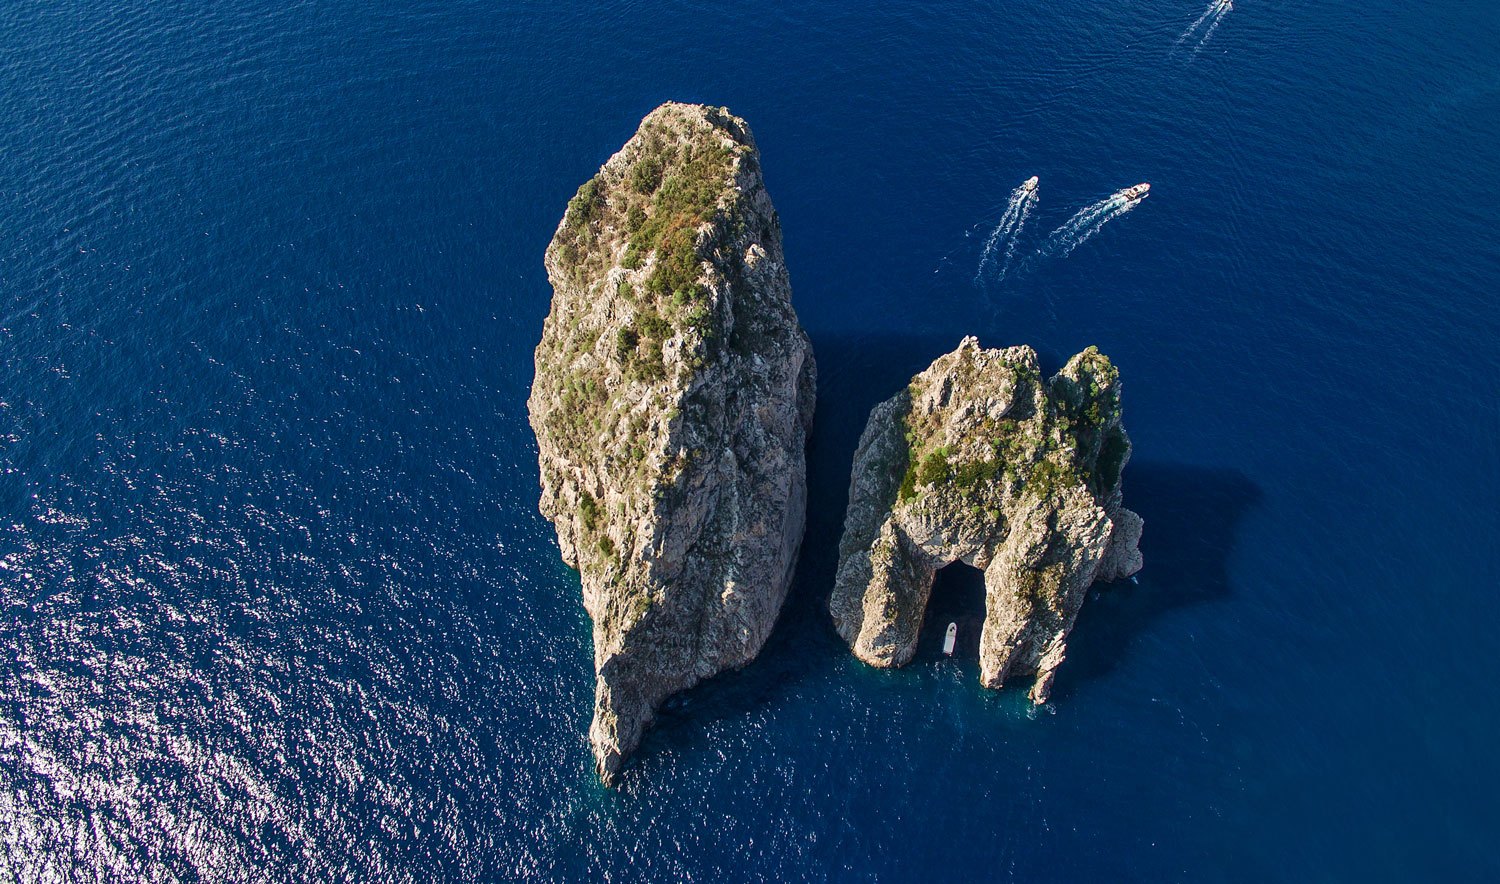 The legendary Faraglioni off the coast of Capri.